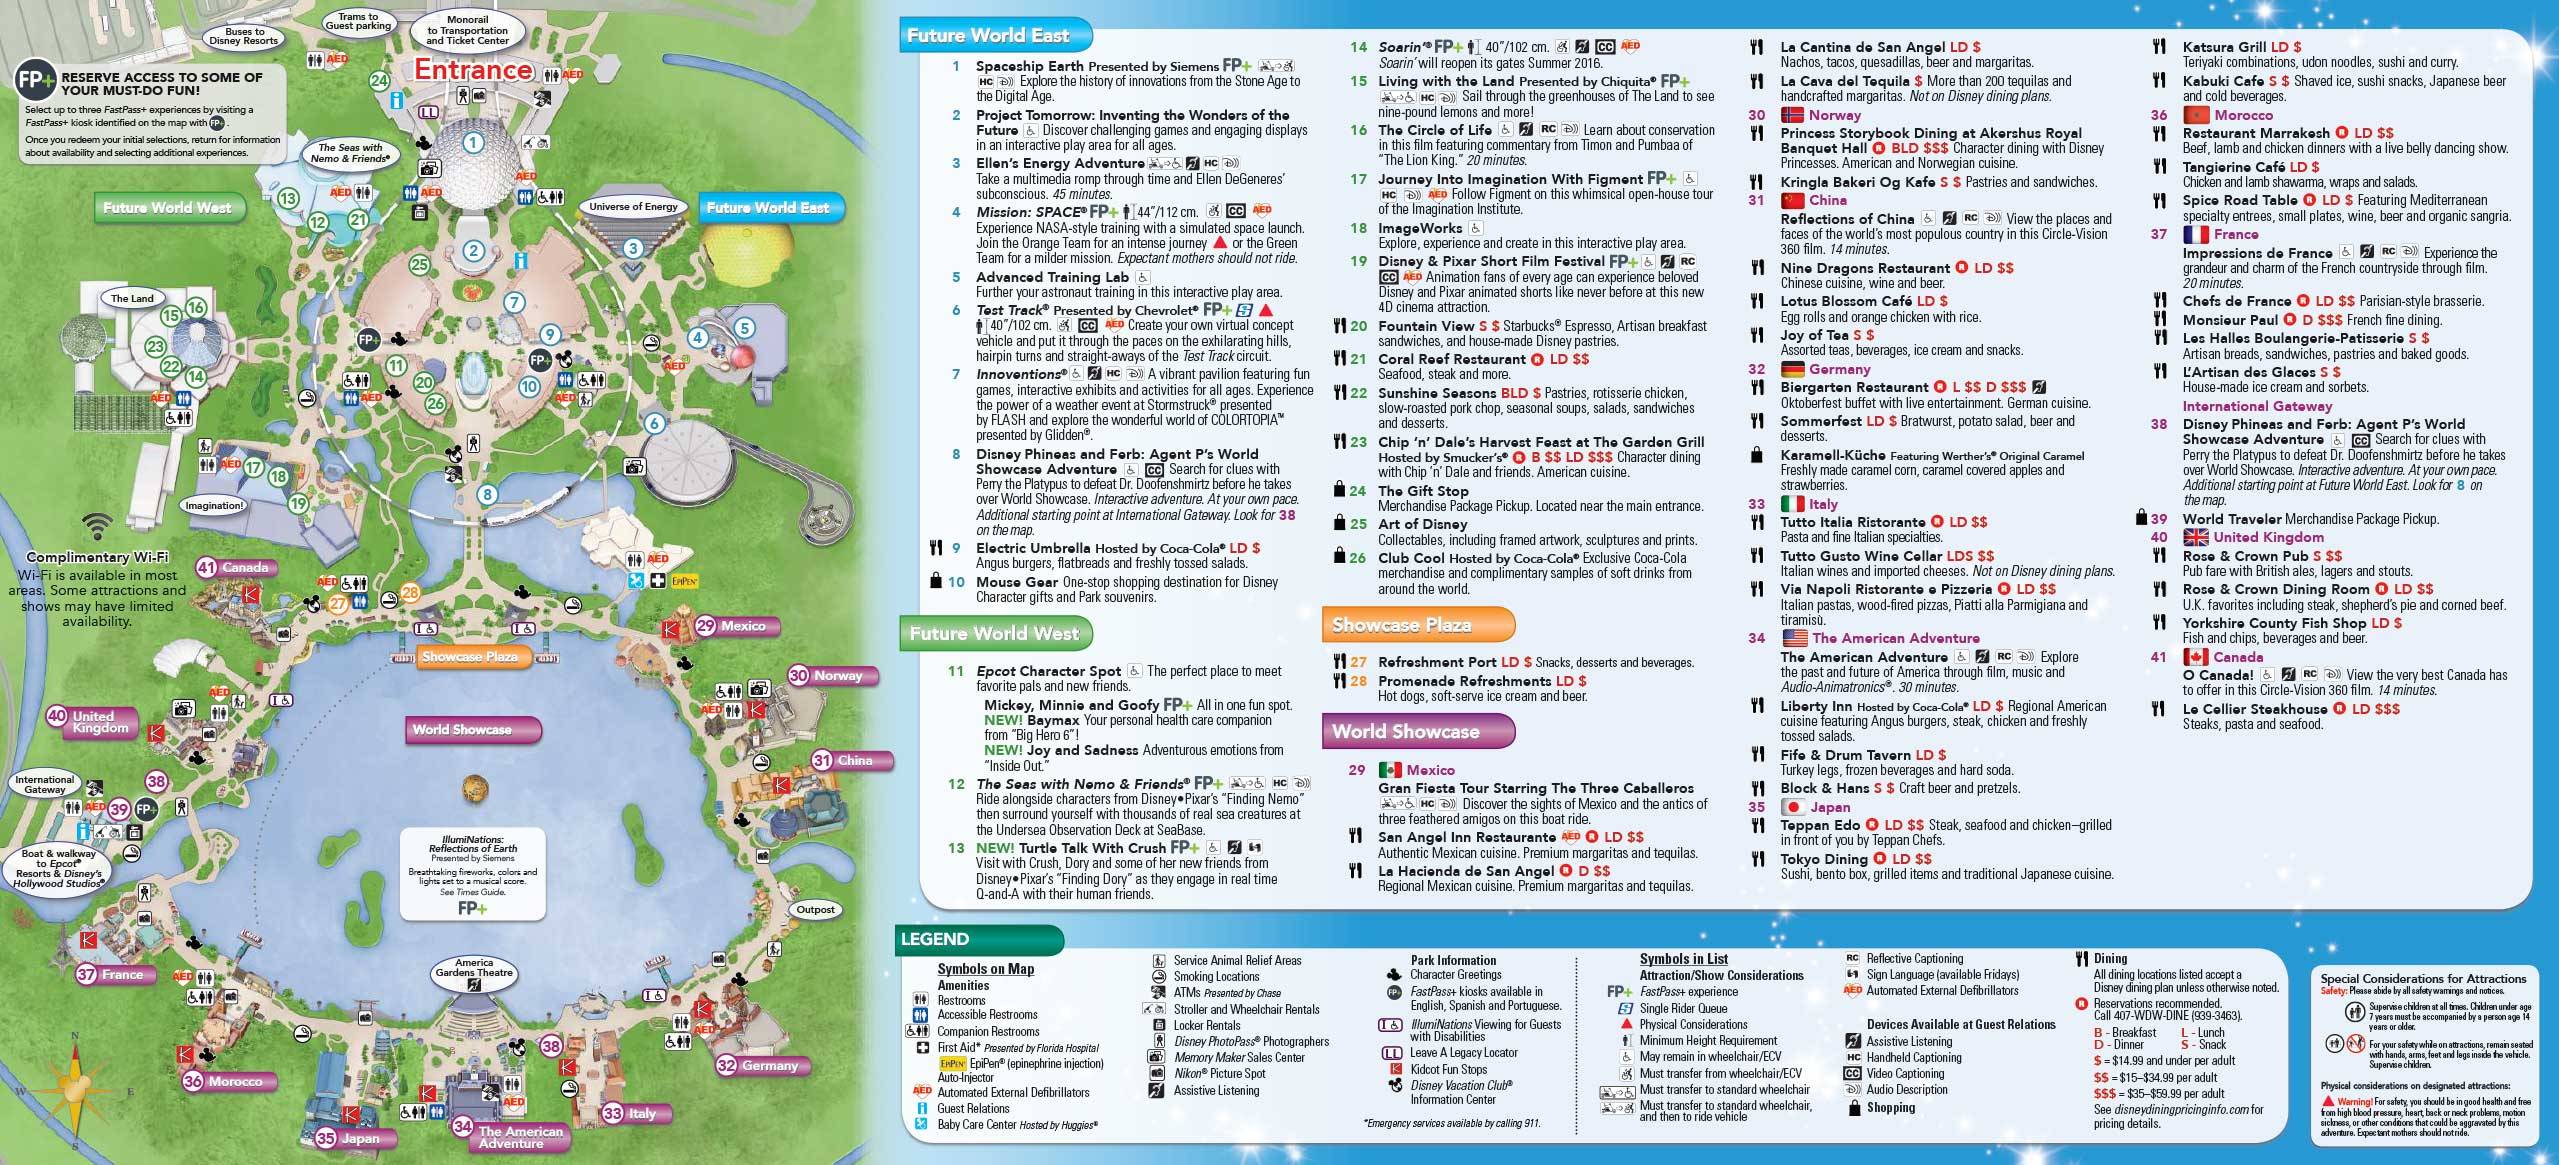 May 2016 Walt Disney World Park Maps